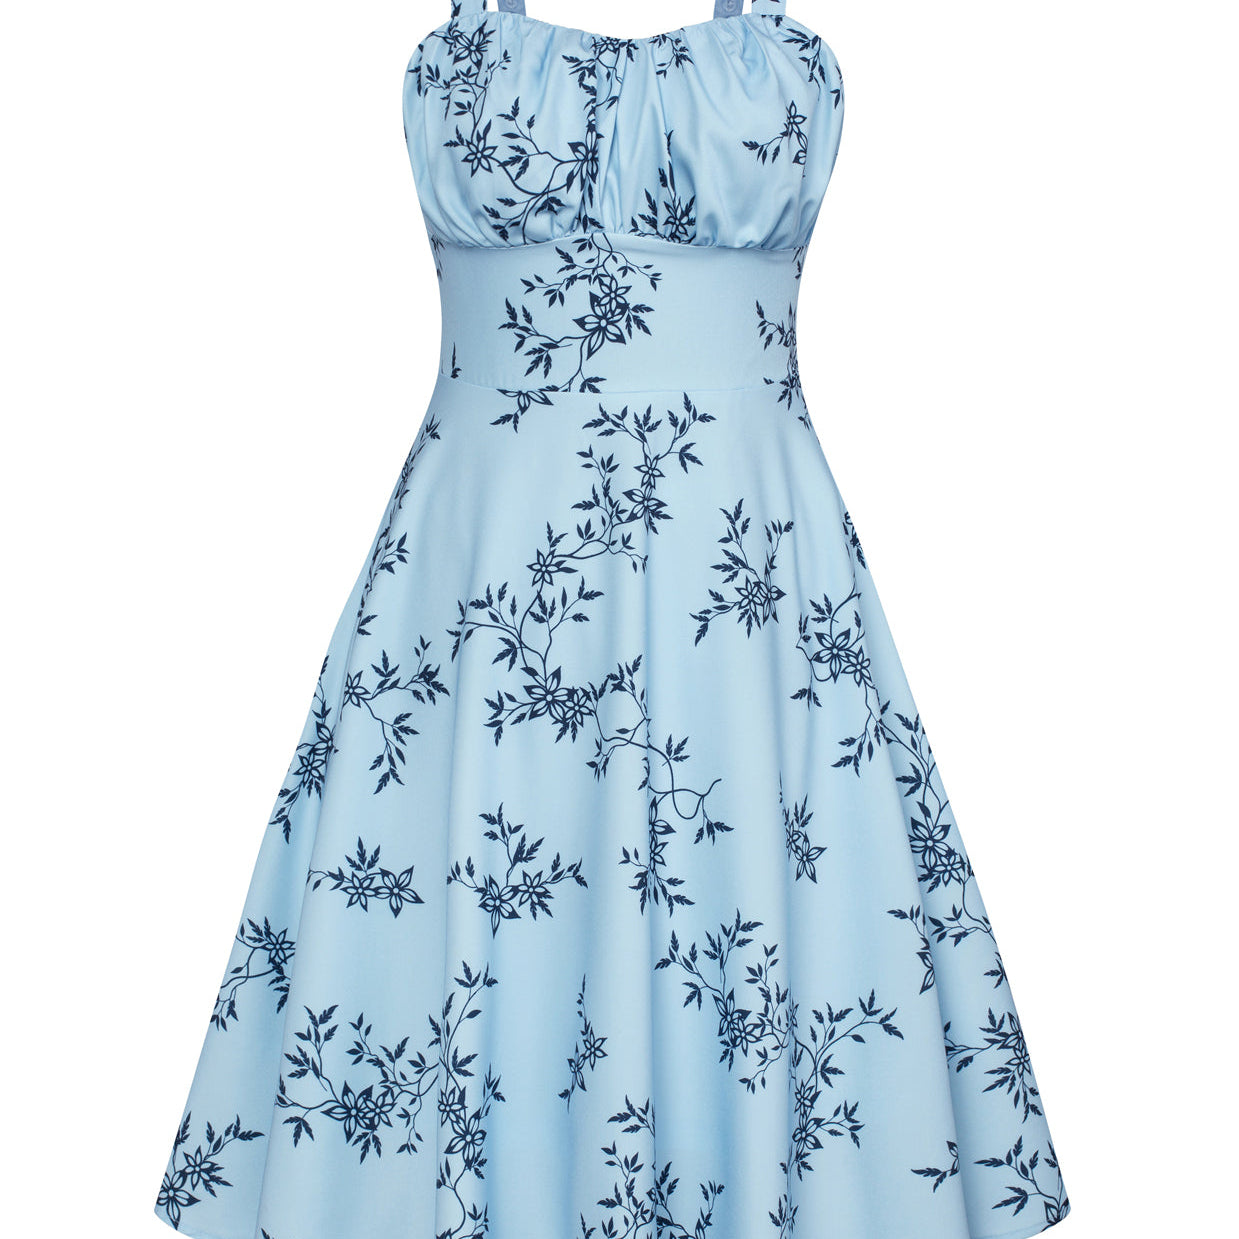 Vintage Leaf Patterns Two-Way Defined Waist Dress Ruched Bodice Flared A-Line Dress